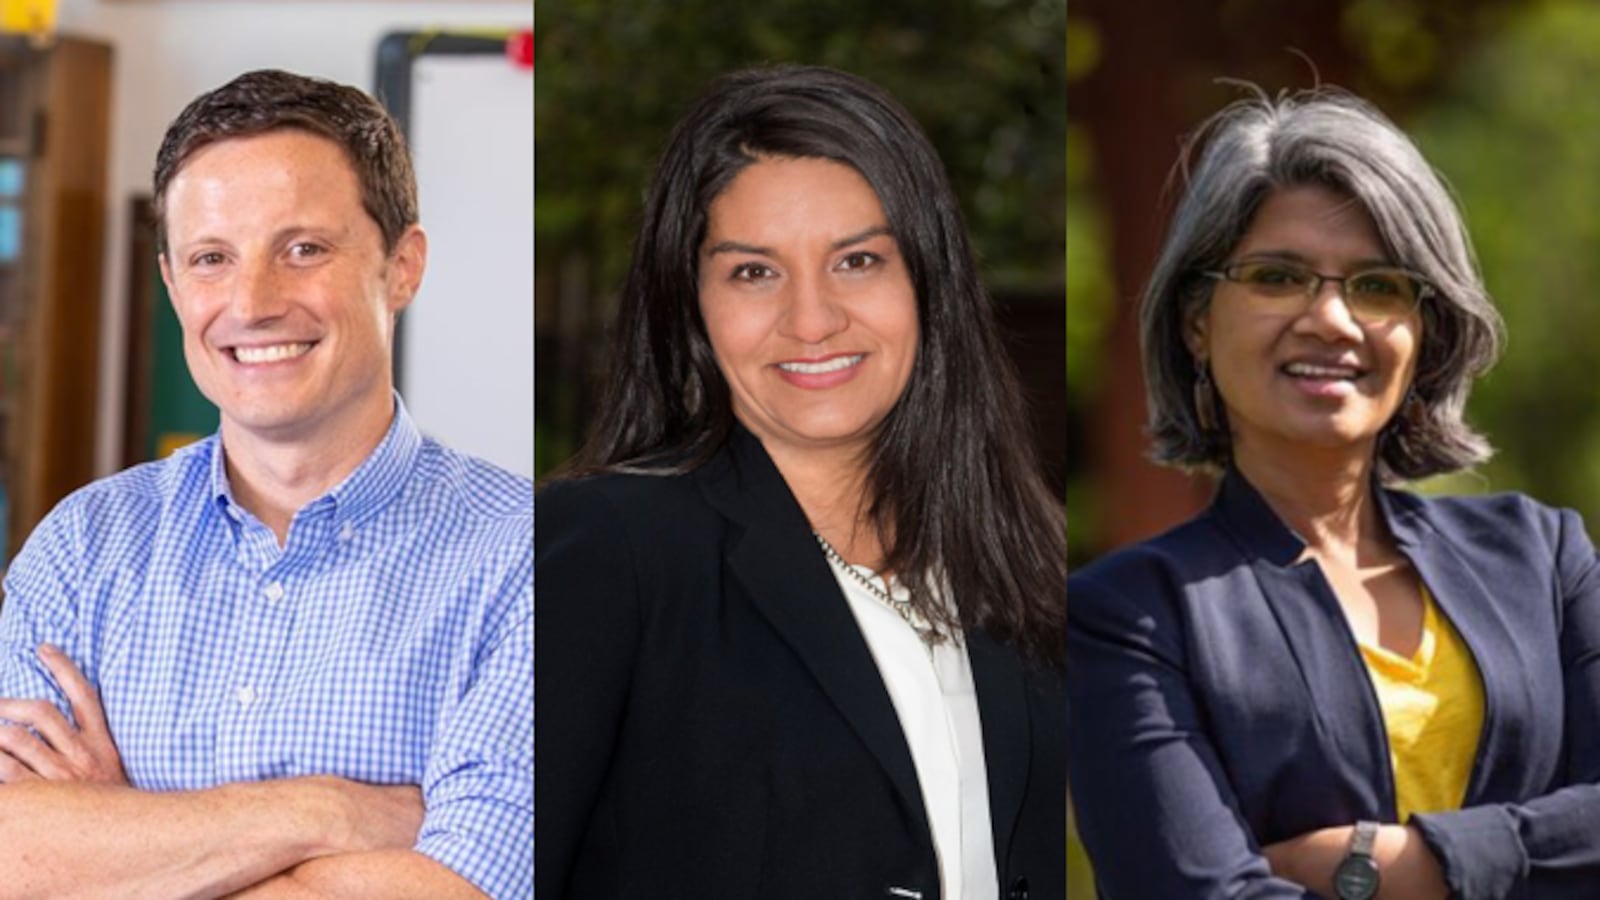 Scott Baldermann, Diana Romero Campbell, and Radhika Nath are seeking the District 1 seat on the Denver school board.